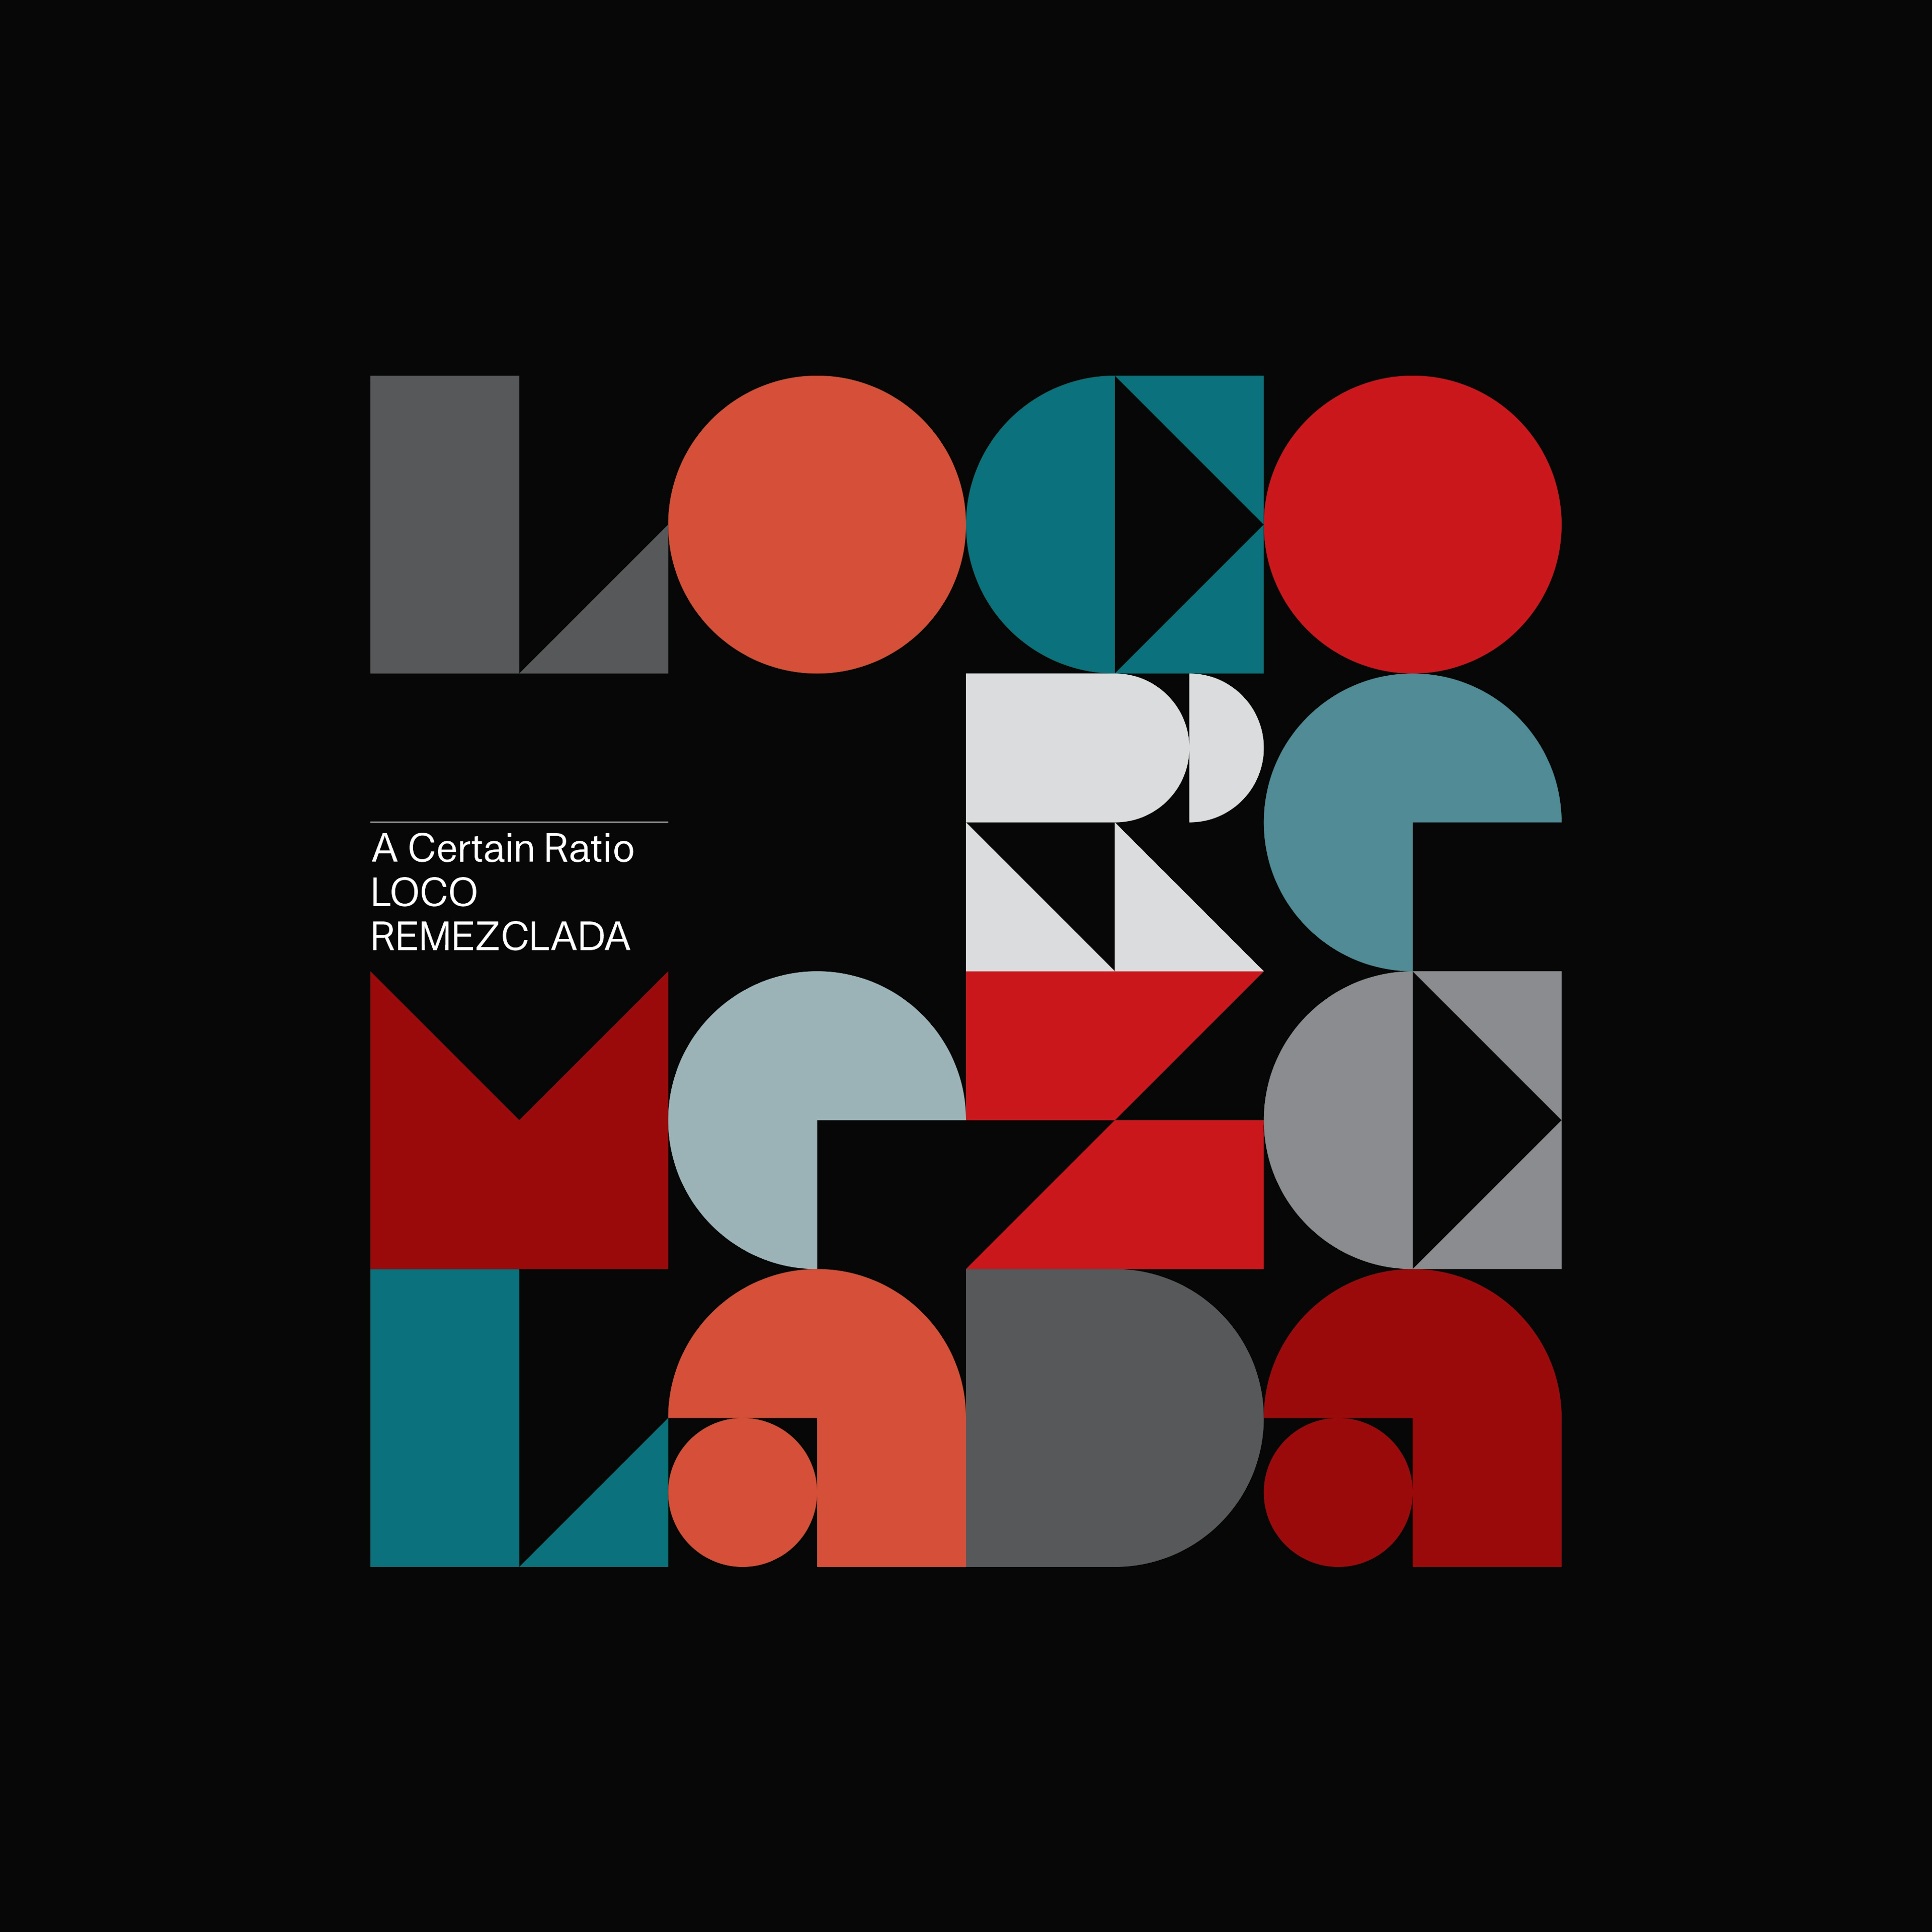 Album artwork for Loco Remezclada by A Certain Ratio